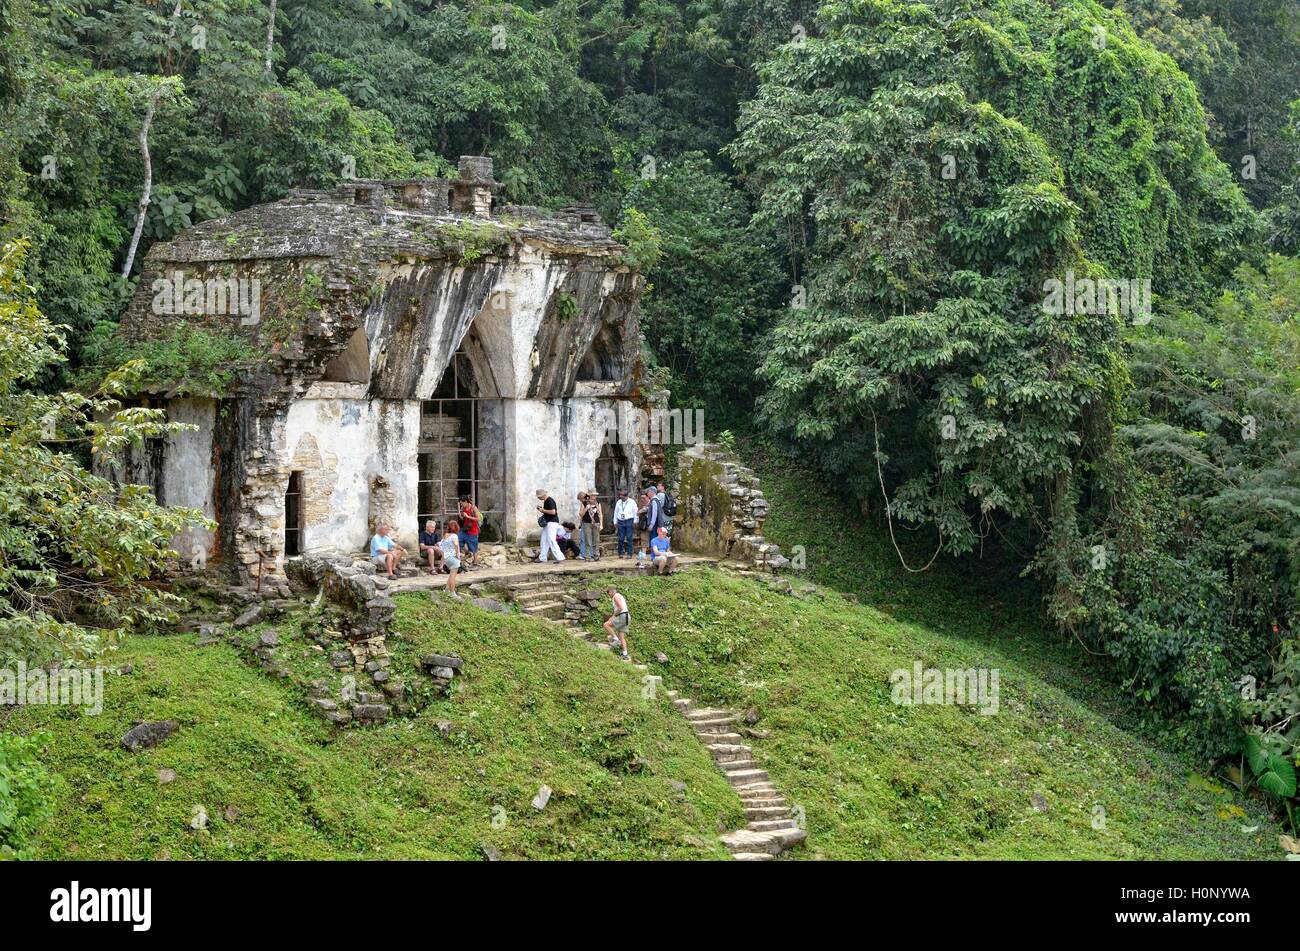 Tourists at Templo de la Cruz Foliada, Mayan ruins of Palenque, Chiapas, Mexico Stock Photo